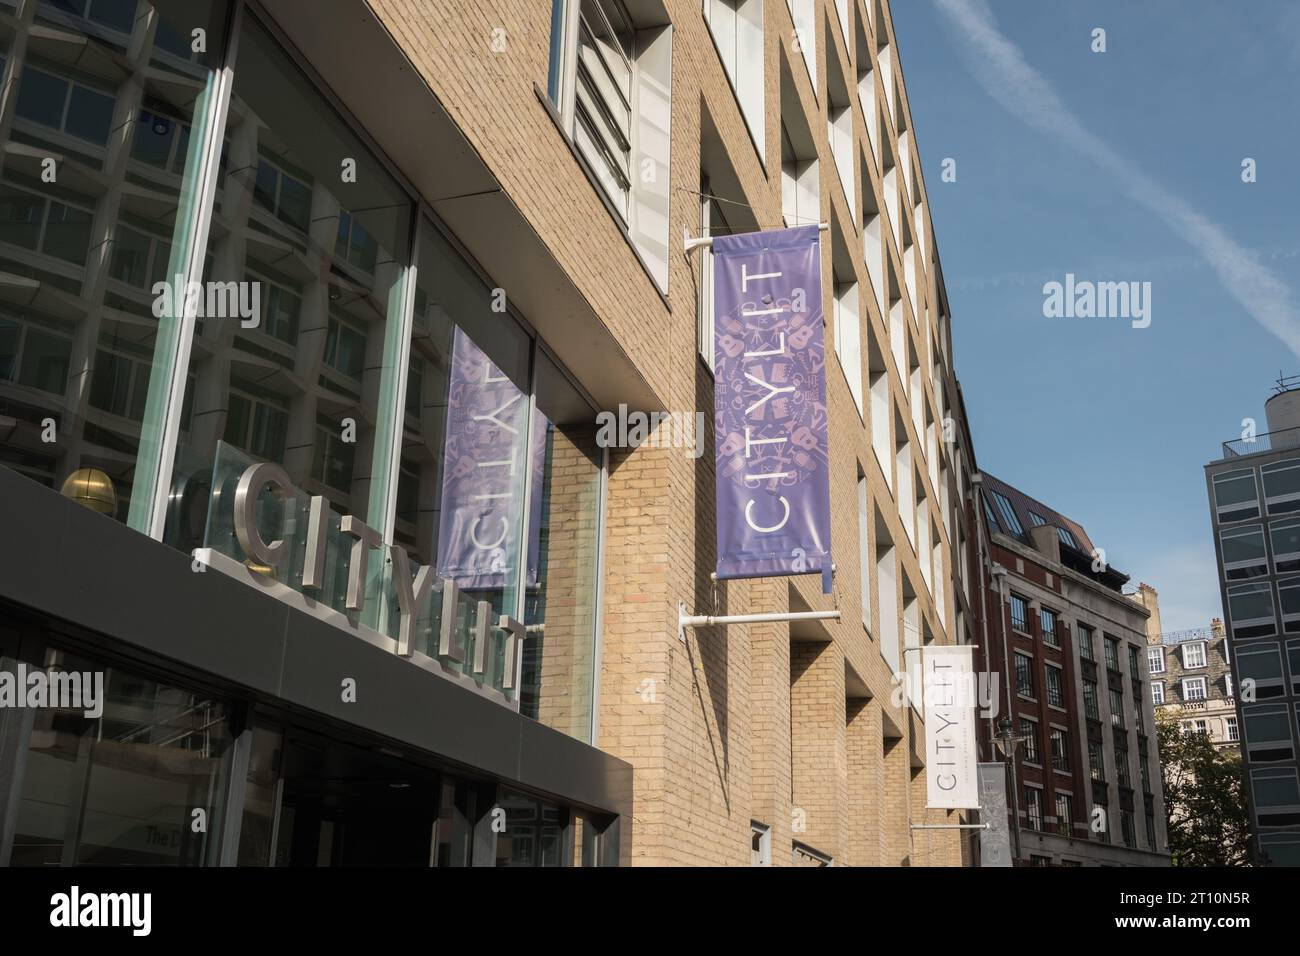 City Lit signage, Keeley Street, Covent Garden, London, WC2, England, U.K. Stock Photo